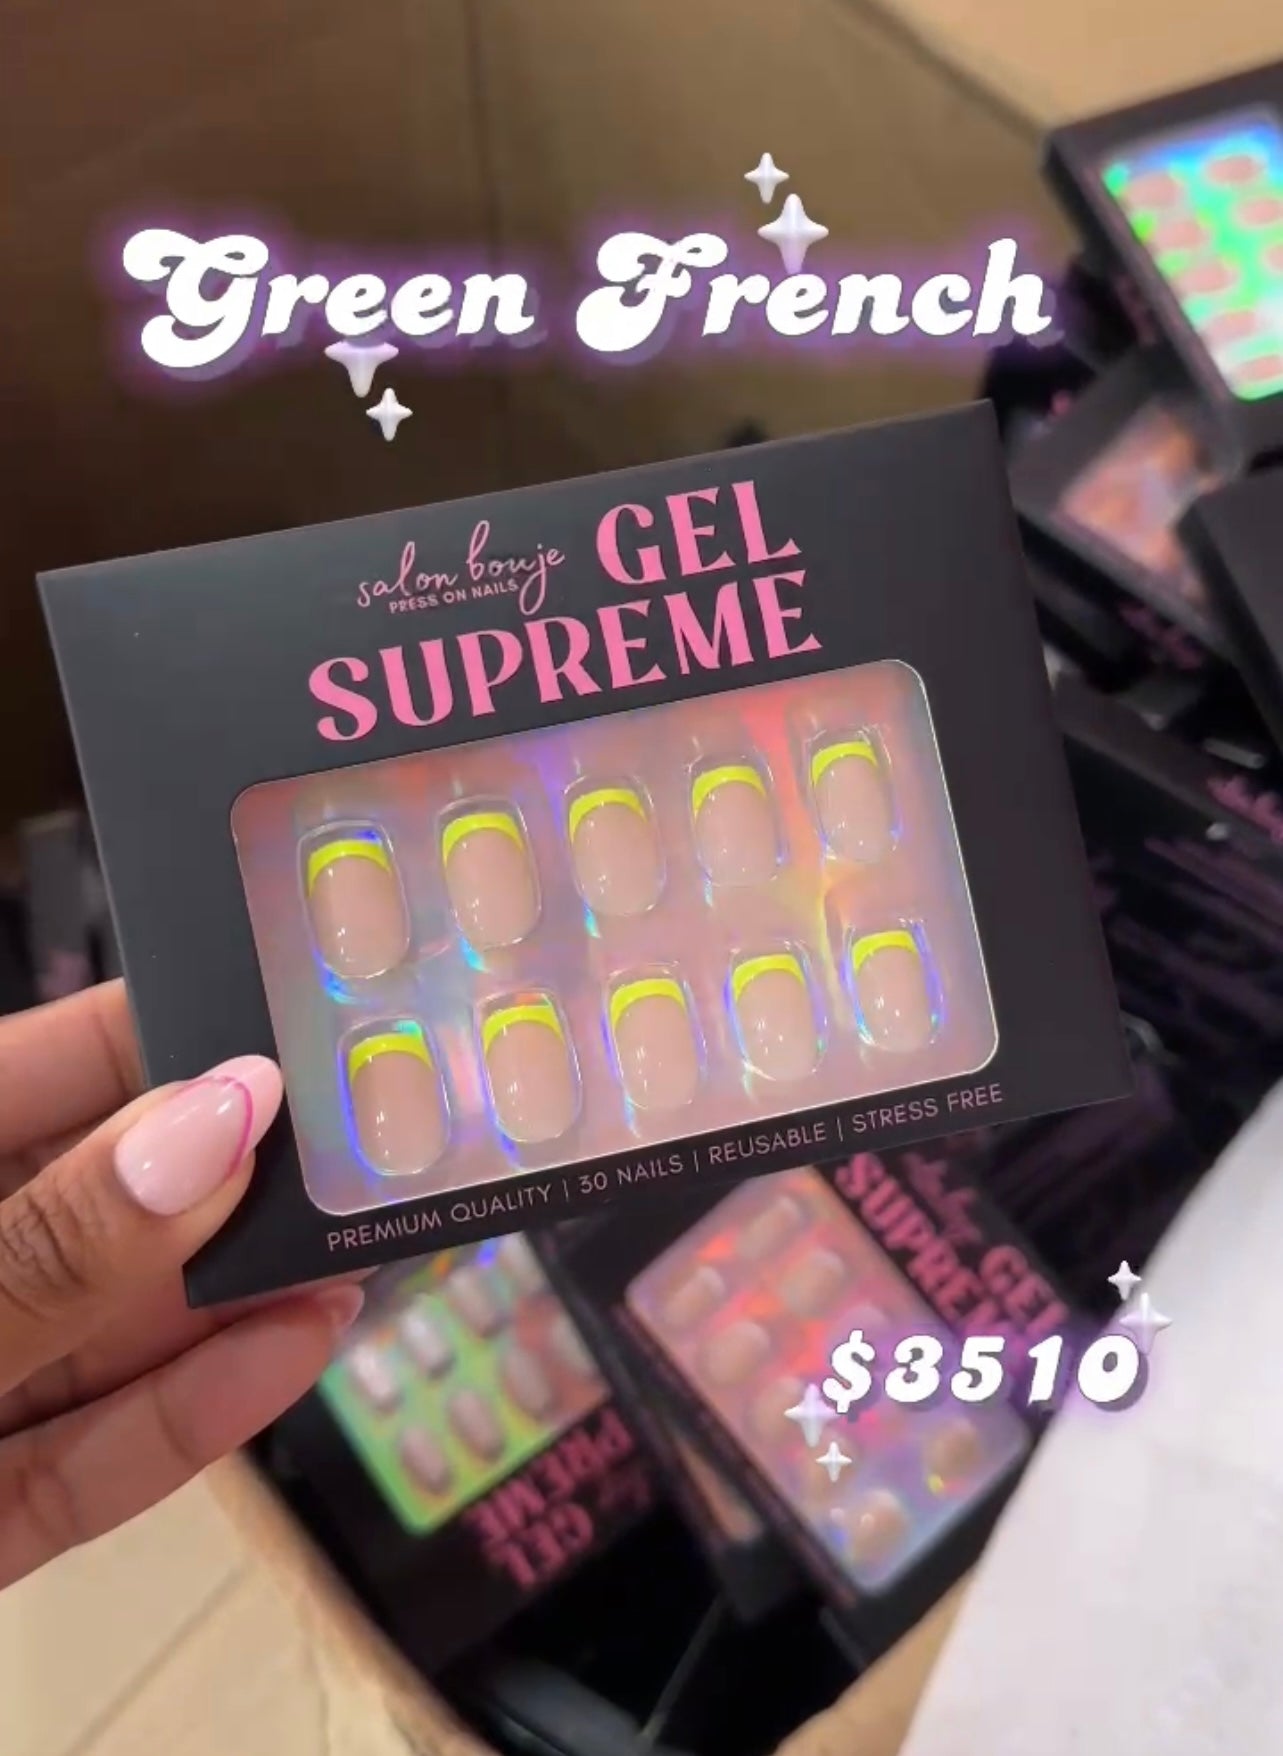 Gel Supreme: Green French